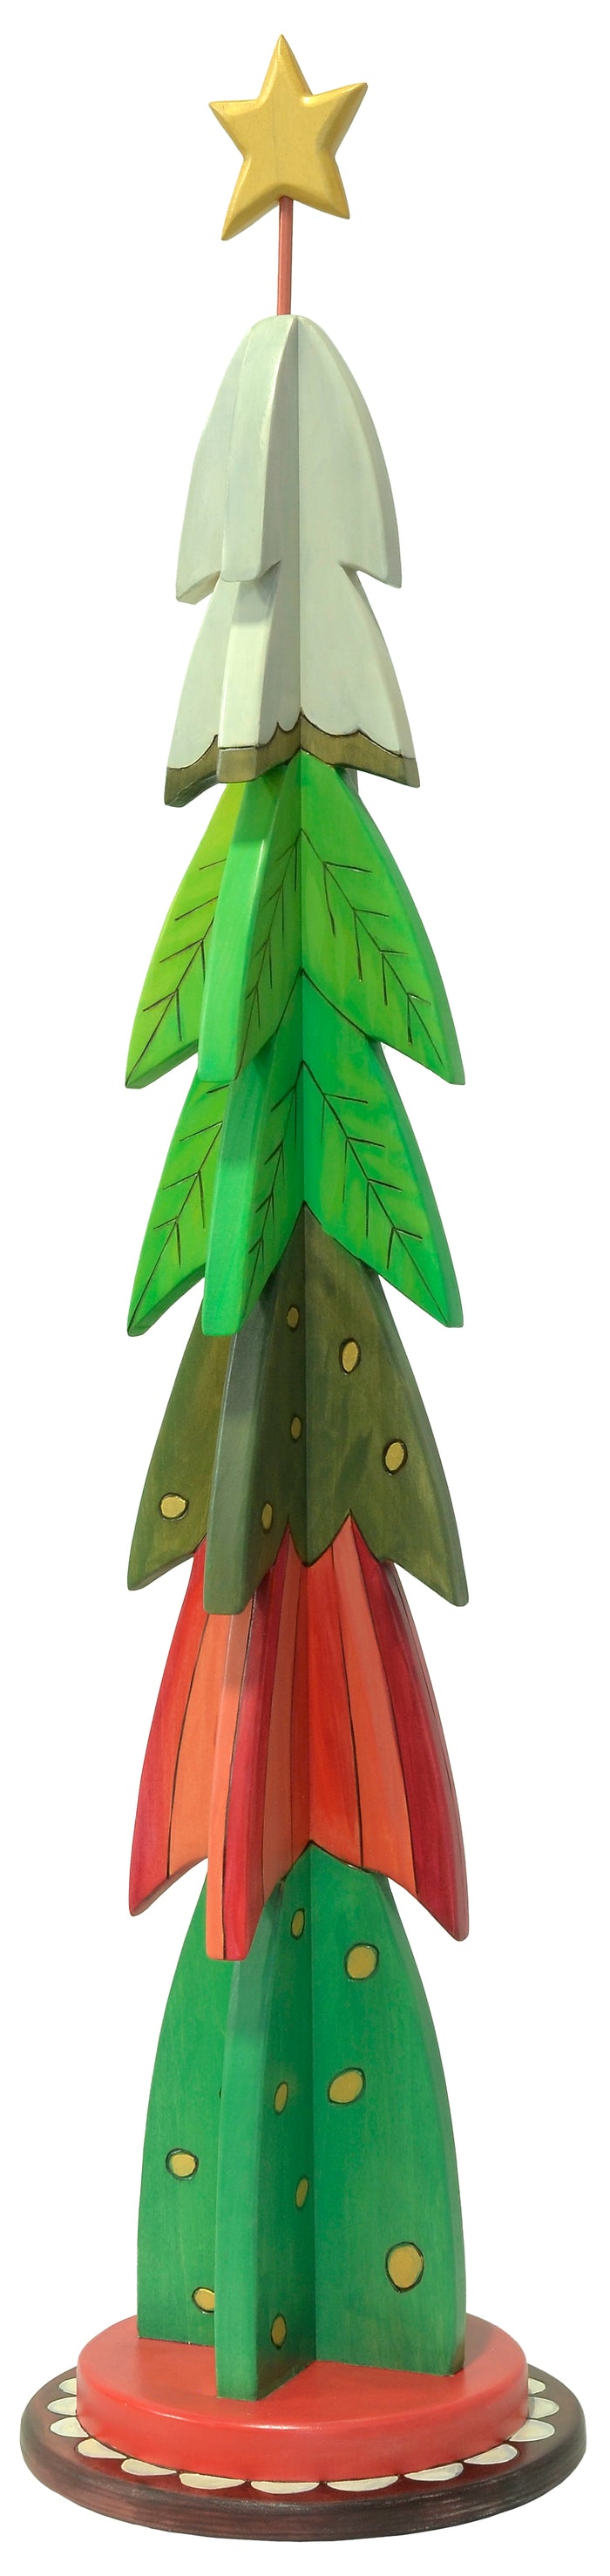 Large Christmas Tree Sculpture